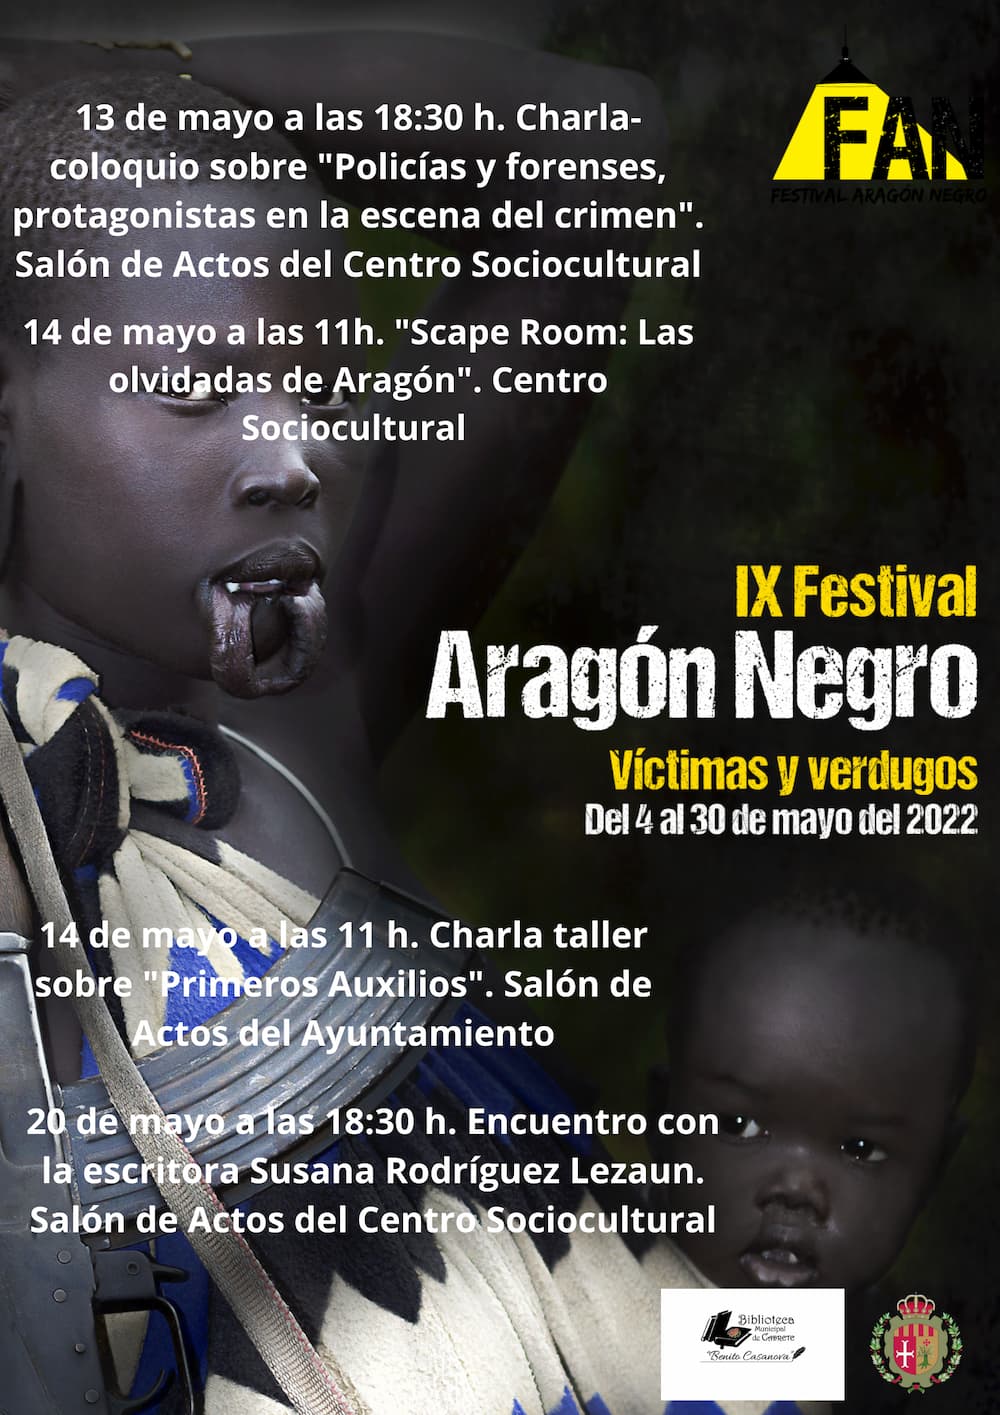 IX Festival Aragón Negro